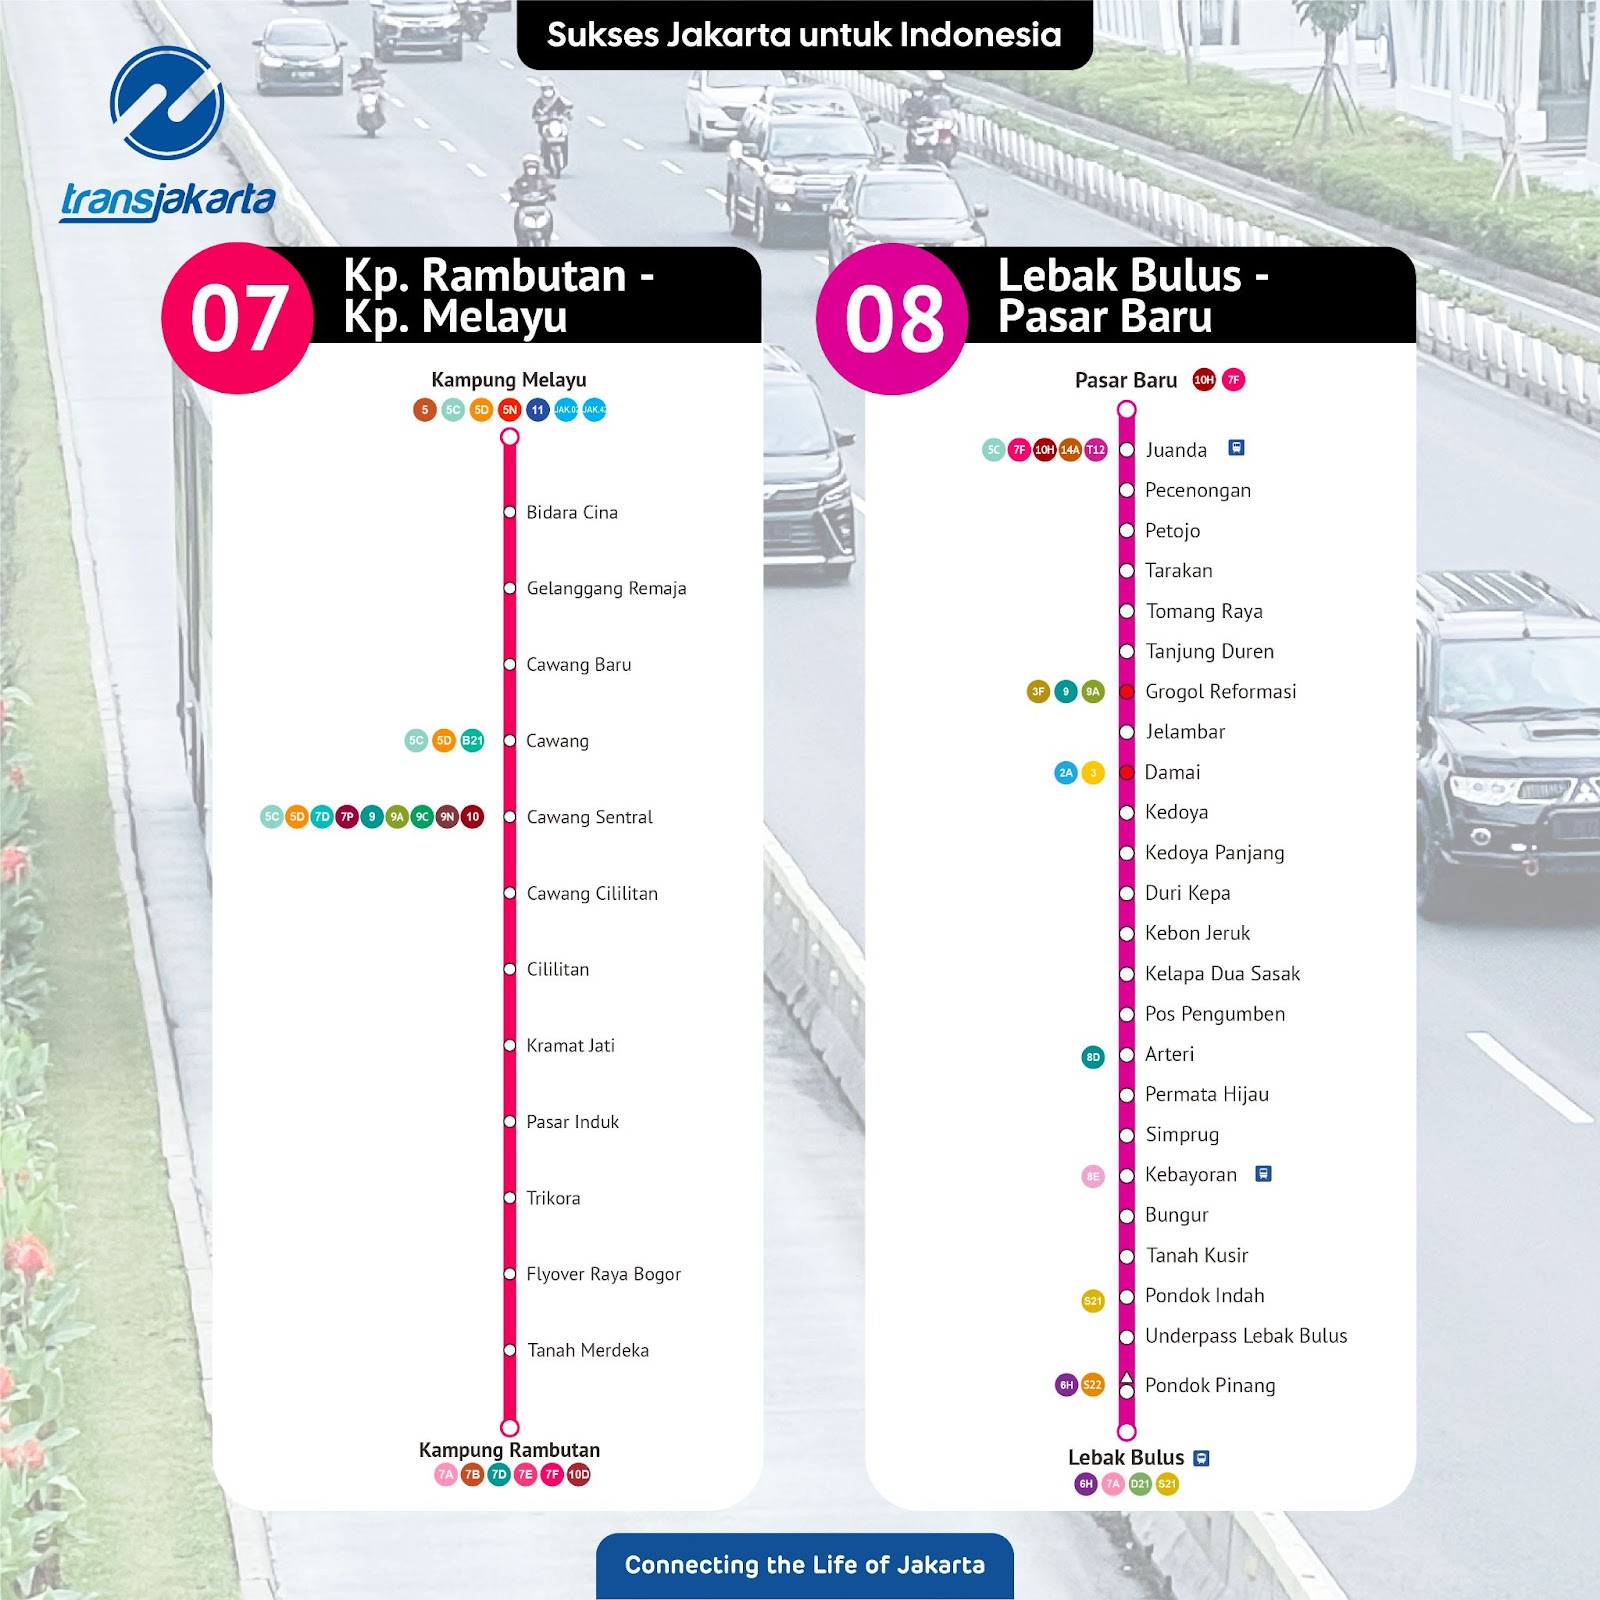 Corridor 7 and corridor 8 routes of Transjakarta. Source:&nbsp;@pt_transjakarta